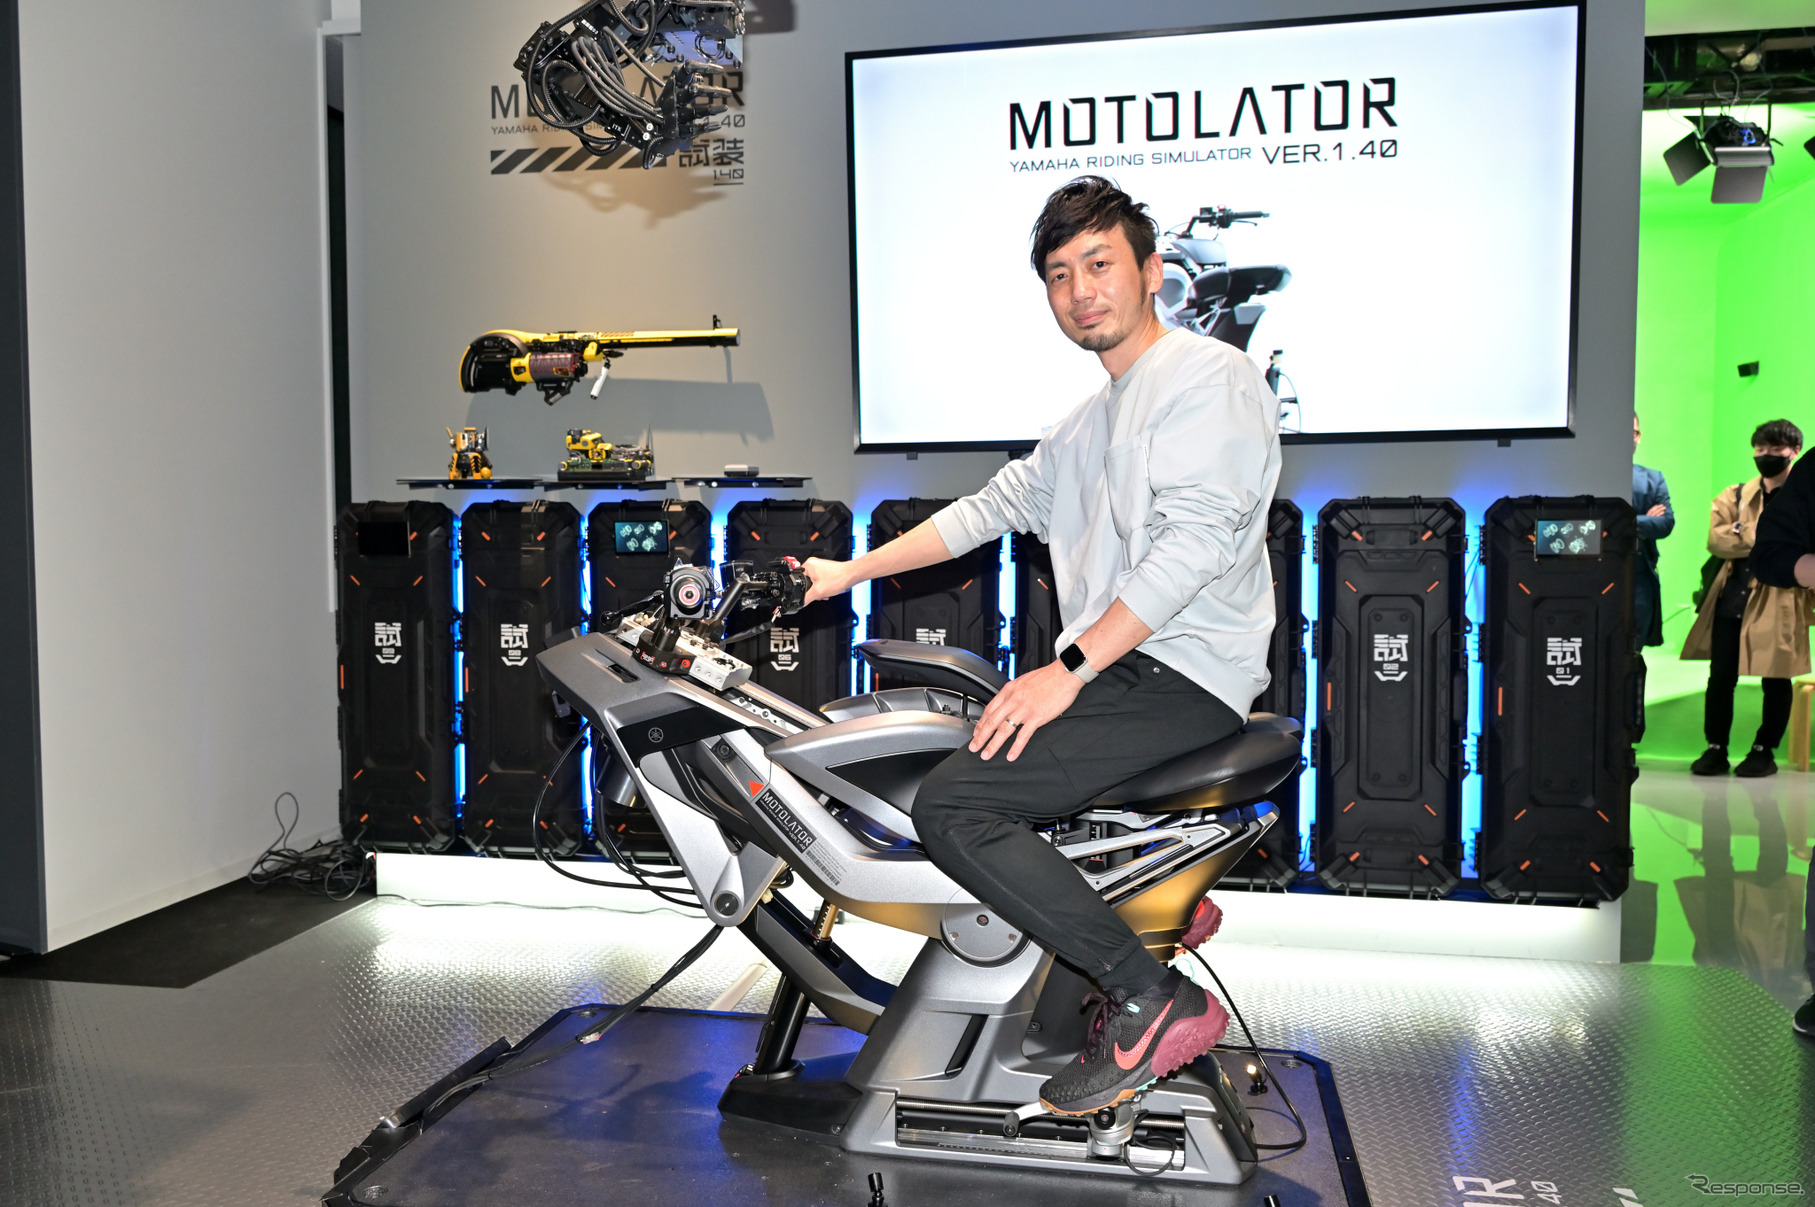 『MOTOLATOR』の企画構想、インターフェースデザインを担当したヤマハ発動機 UI/UXデザイナー 渡辺政樹さん